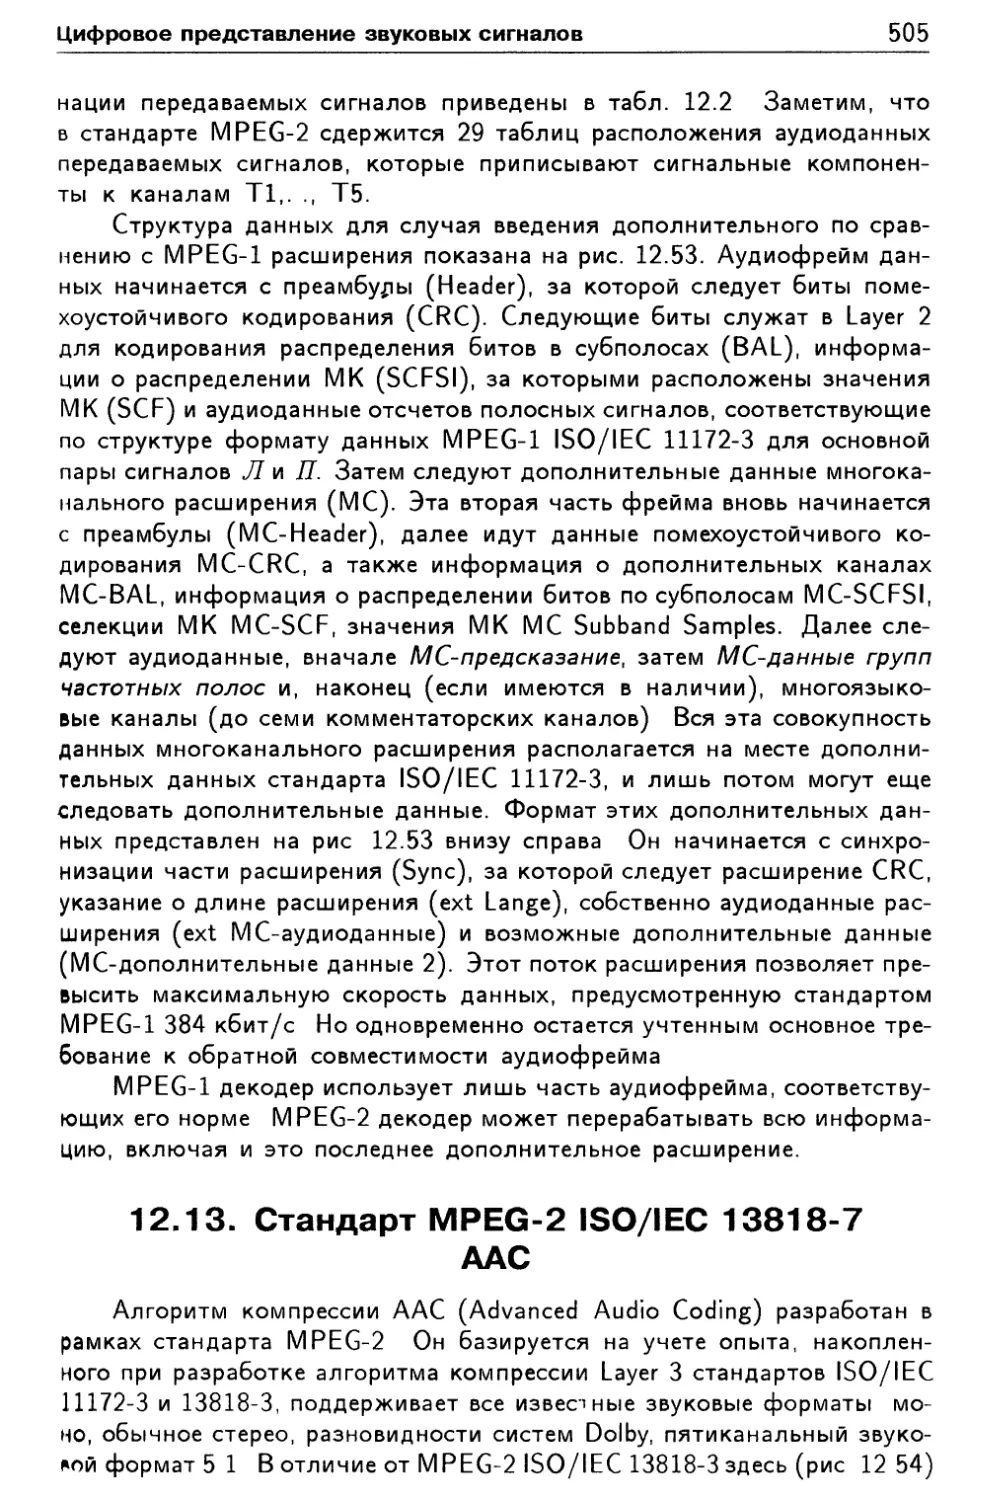 12.13 Стандарт MPEG-2 ISO/IEC 13818-7 ААС